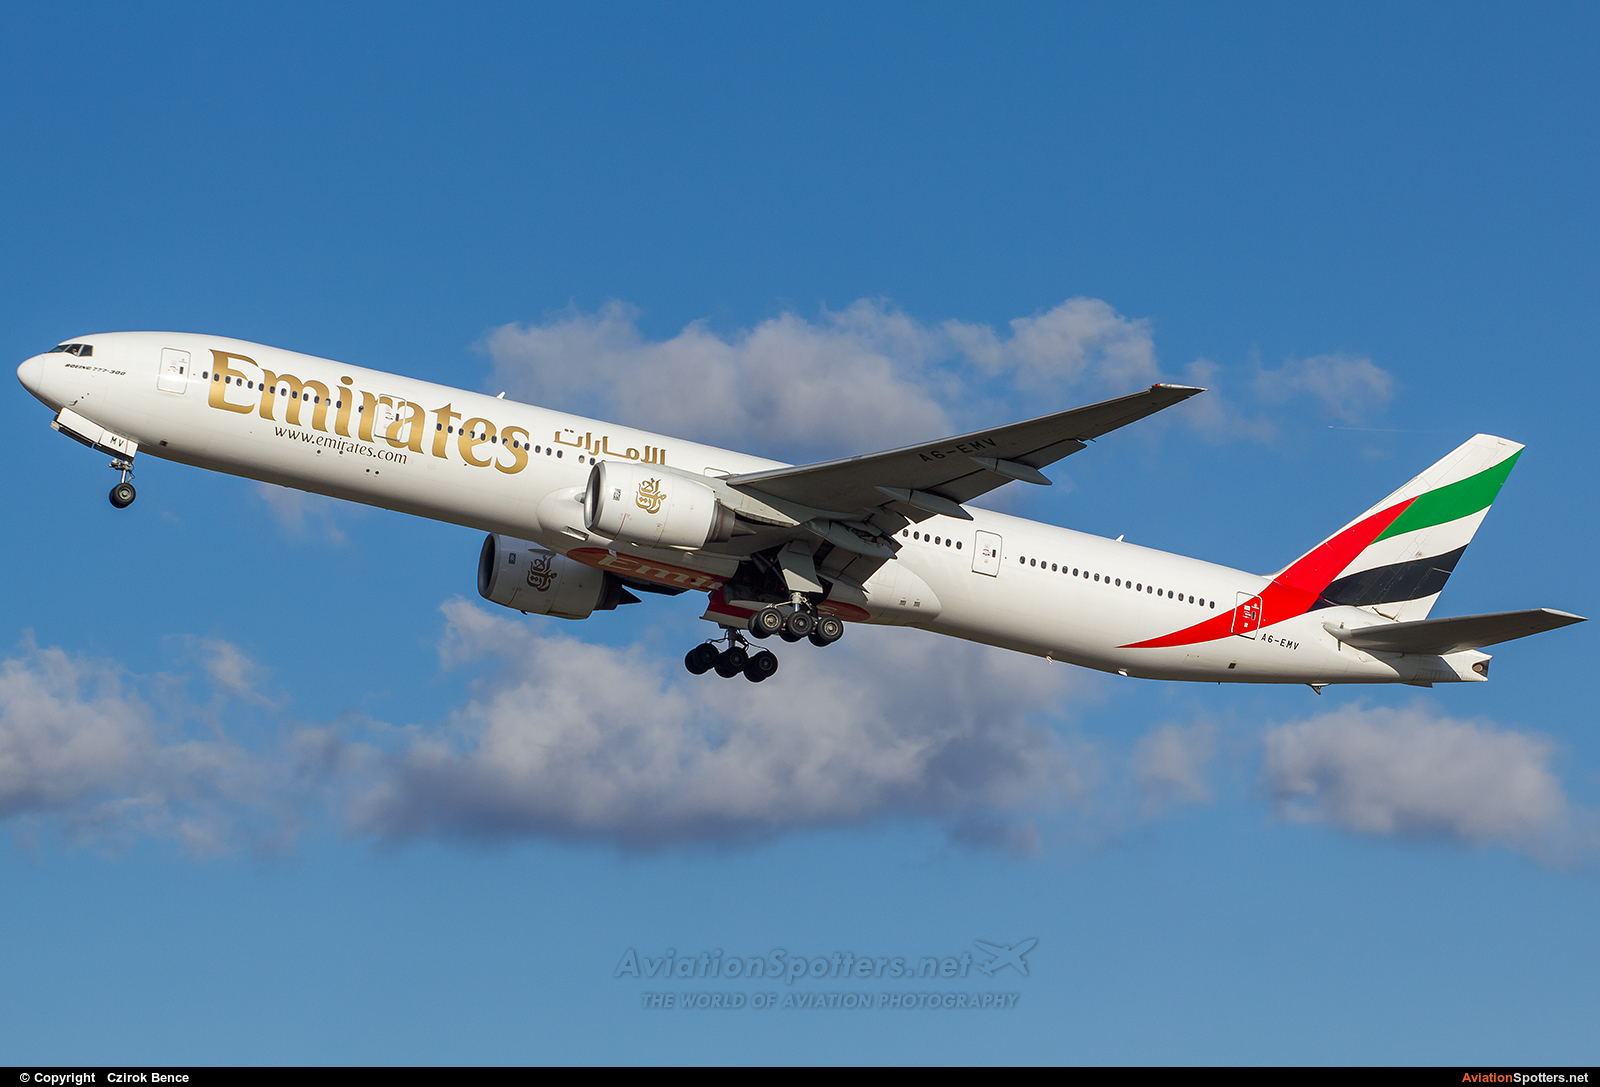 Emirates Airlines  -  777-300  (A6-EMV) By Czirok Bence (Orosmet)